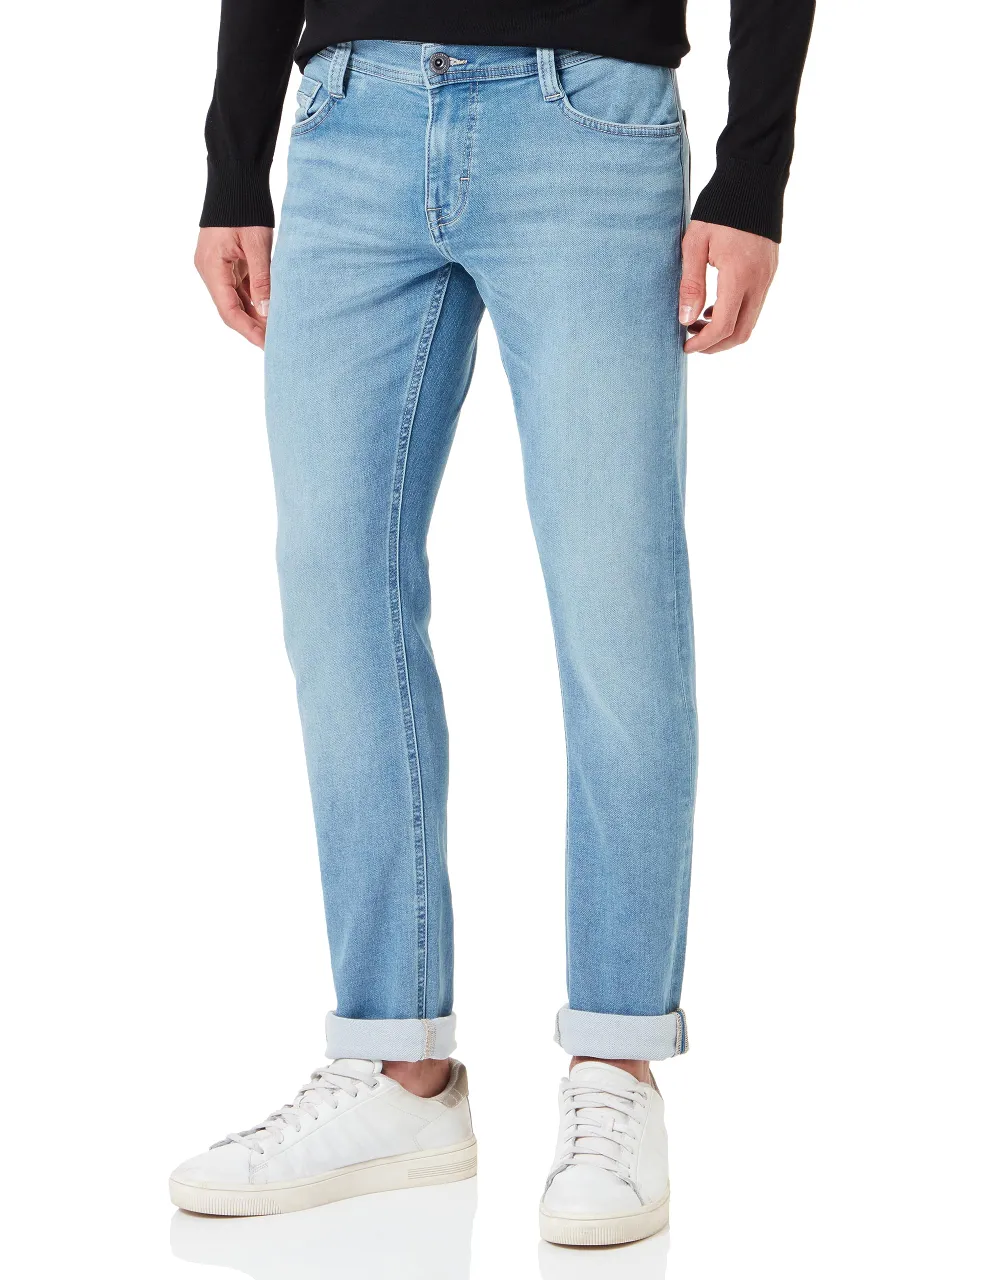 MUSTANG Herren Jeans Hose Style Oregon Slim